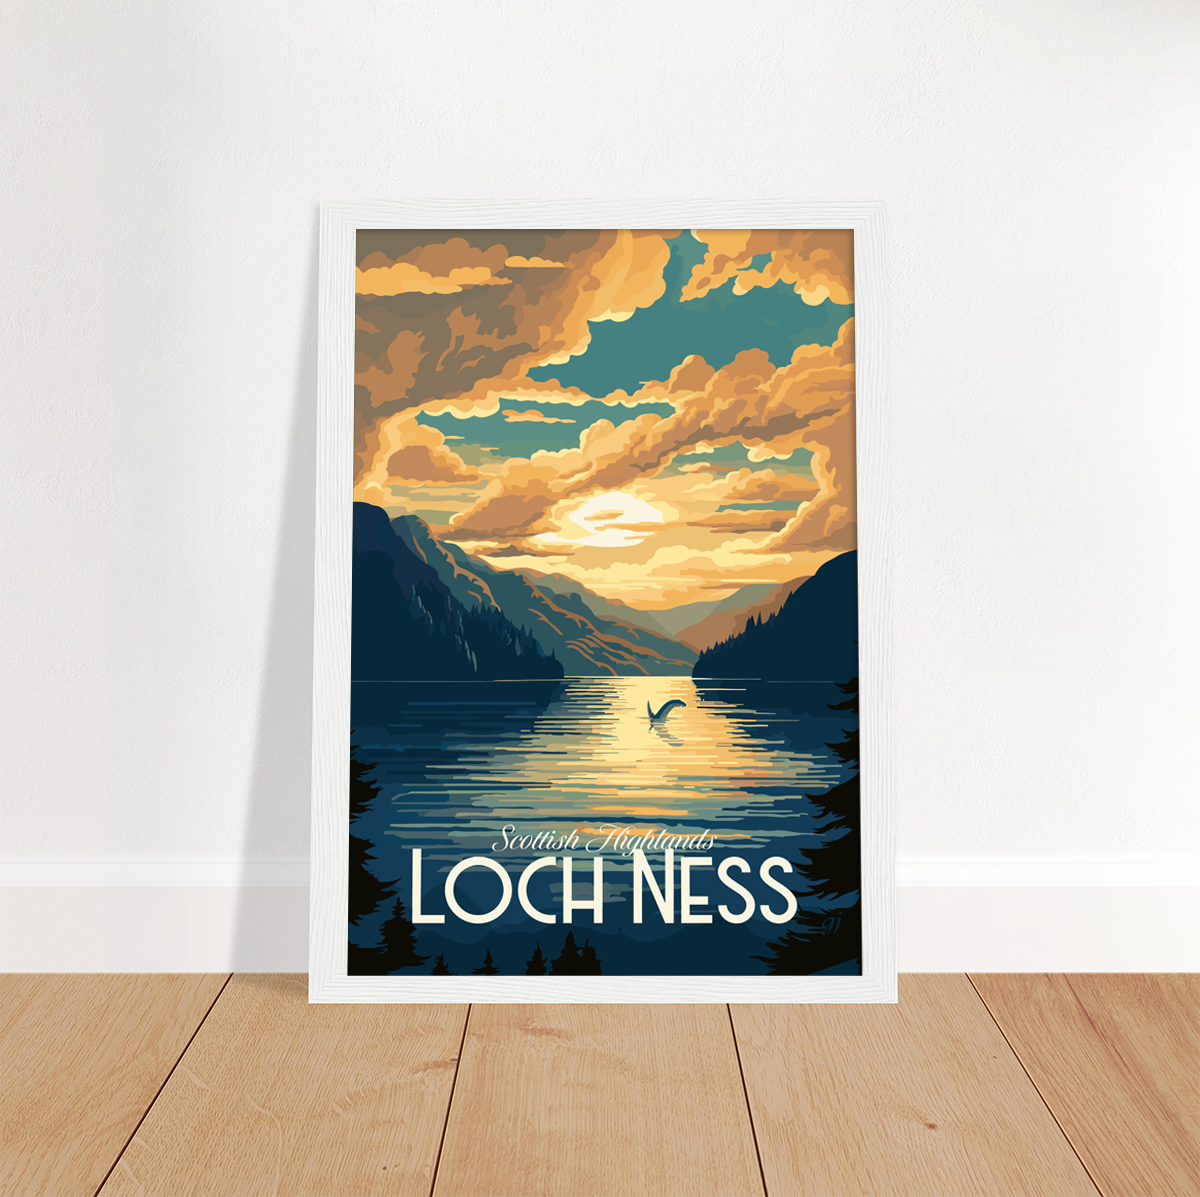 Loch Ness poster by bon voyage design